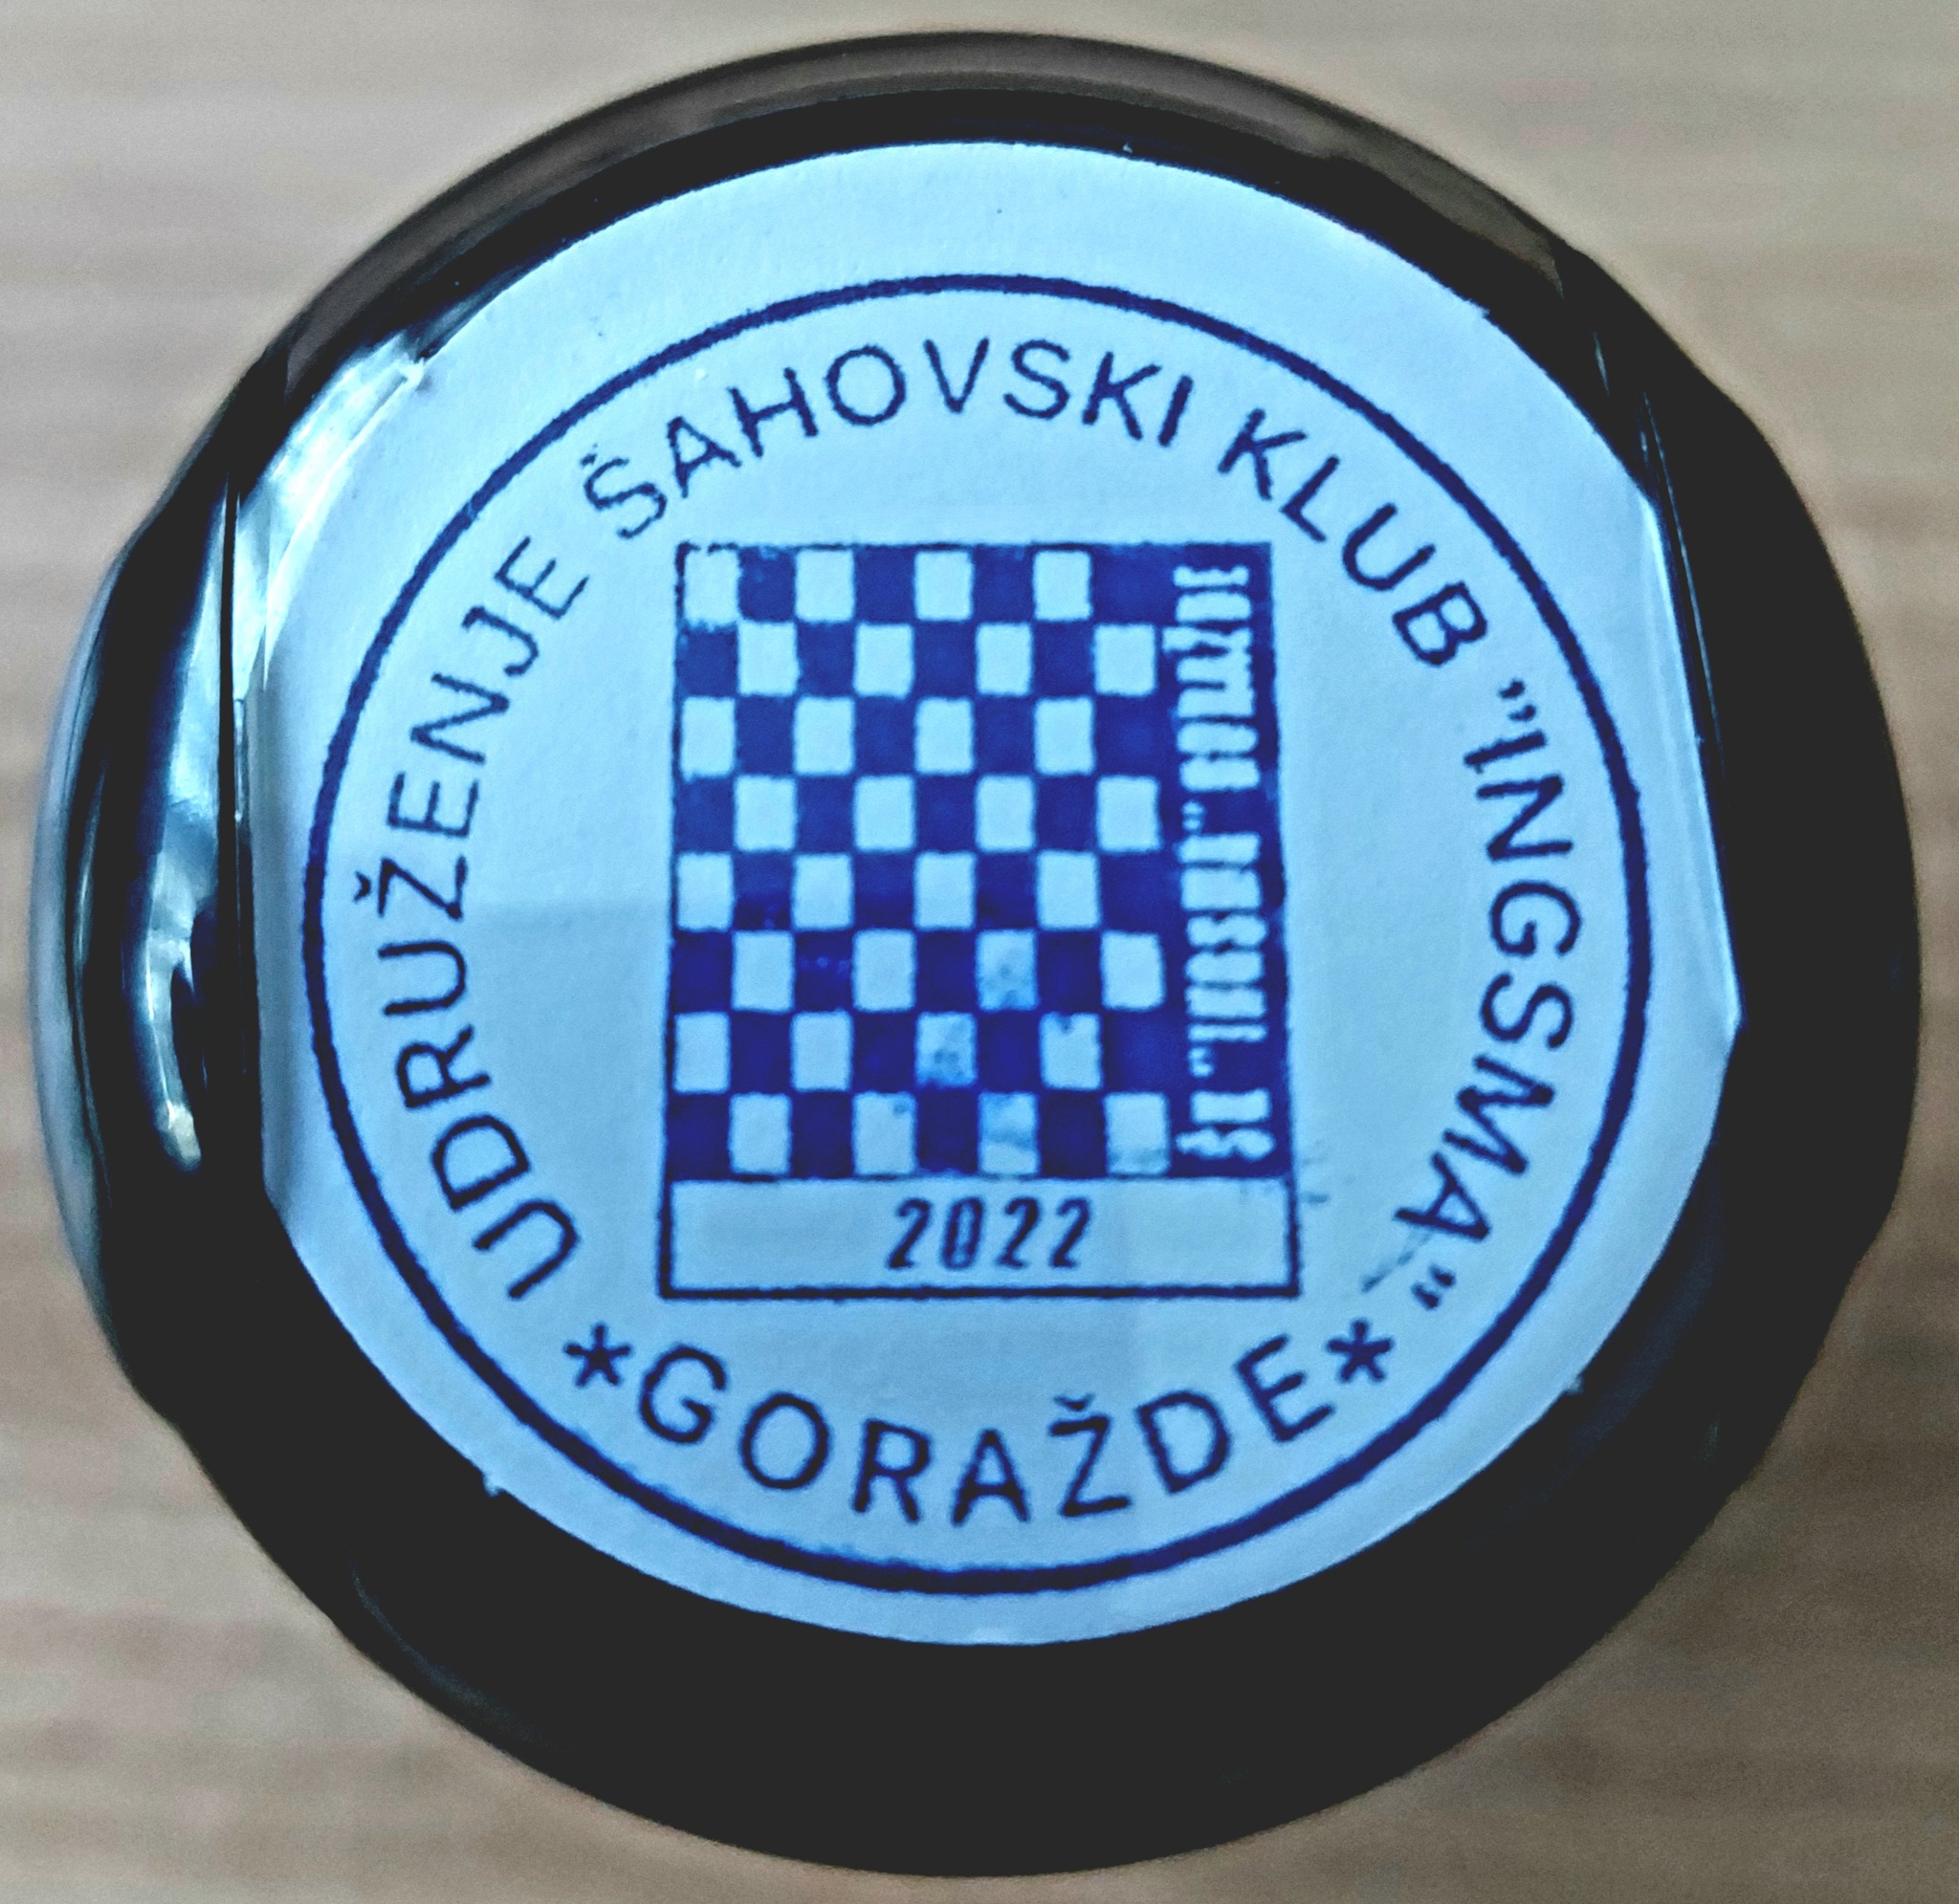 RASPIS 1. Pozivni turnir u šahu “INGSMA 2022”